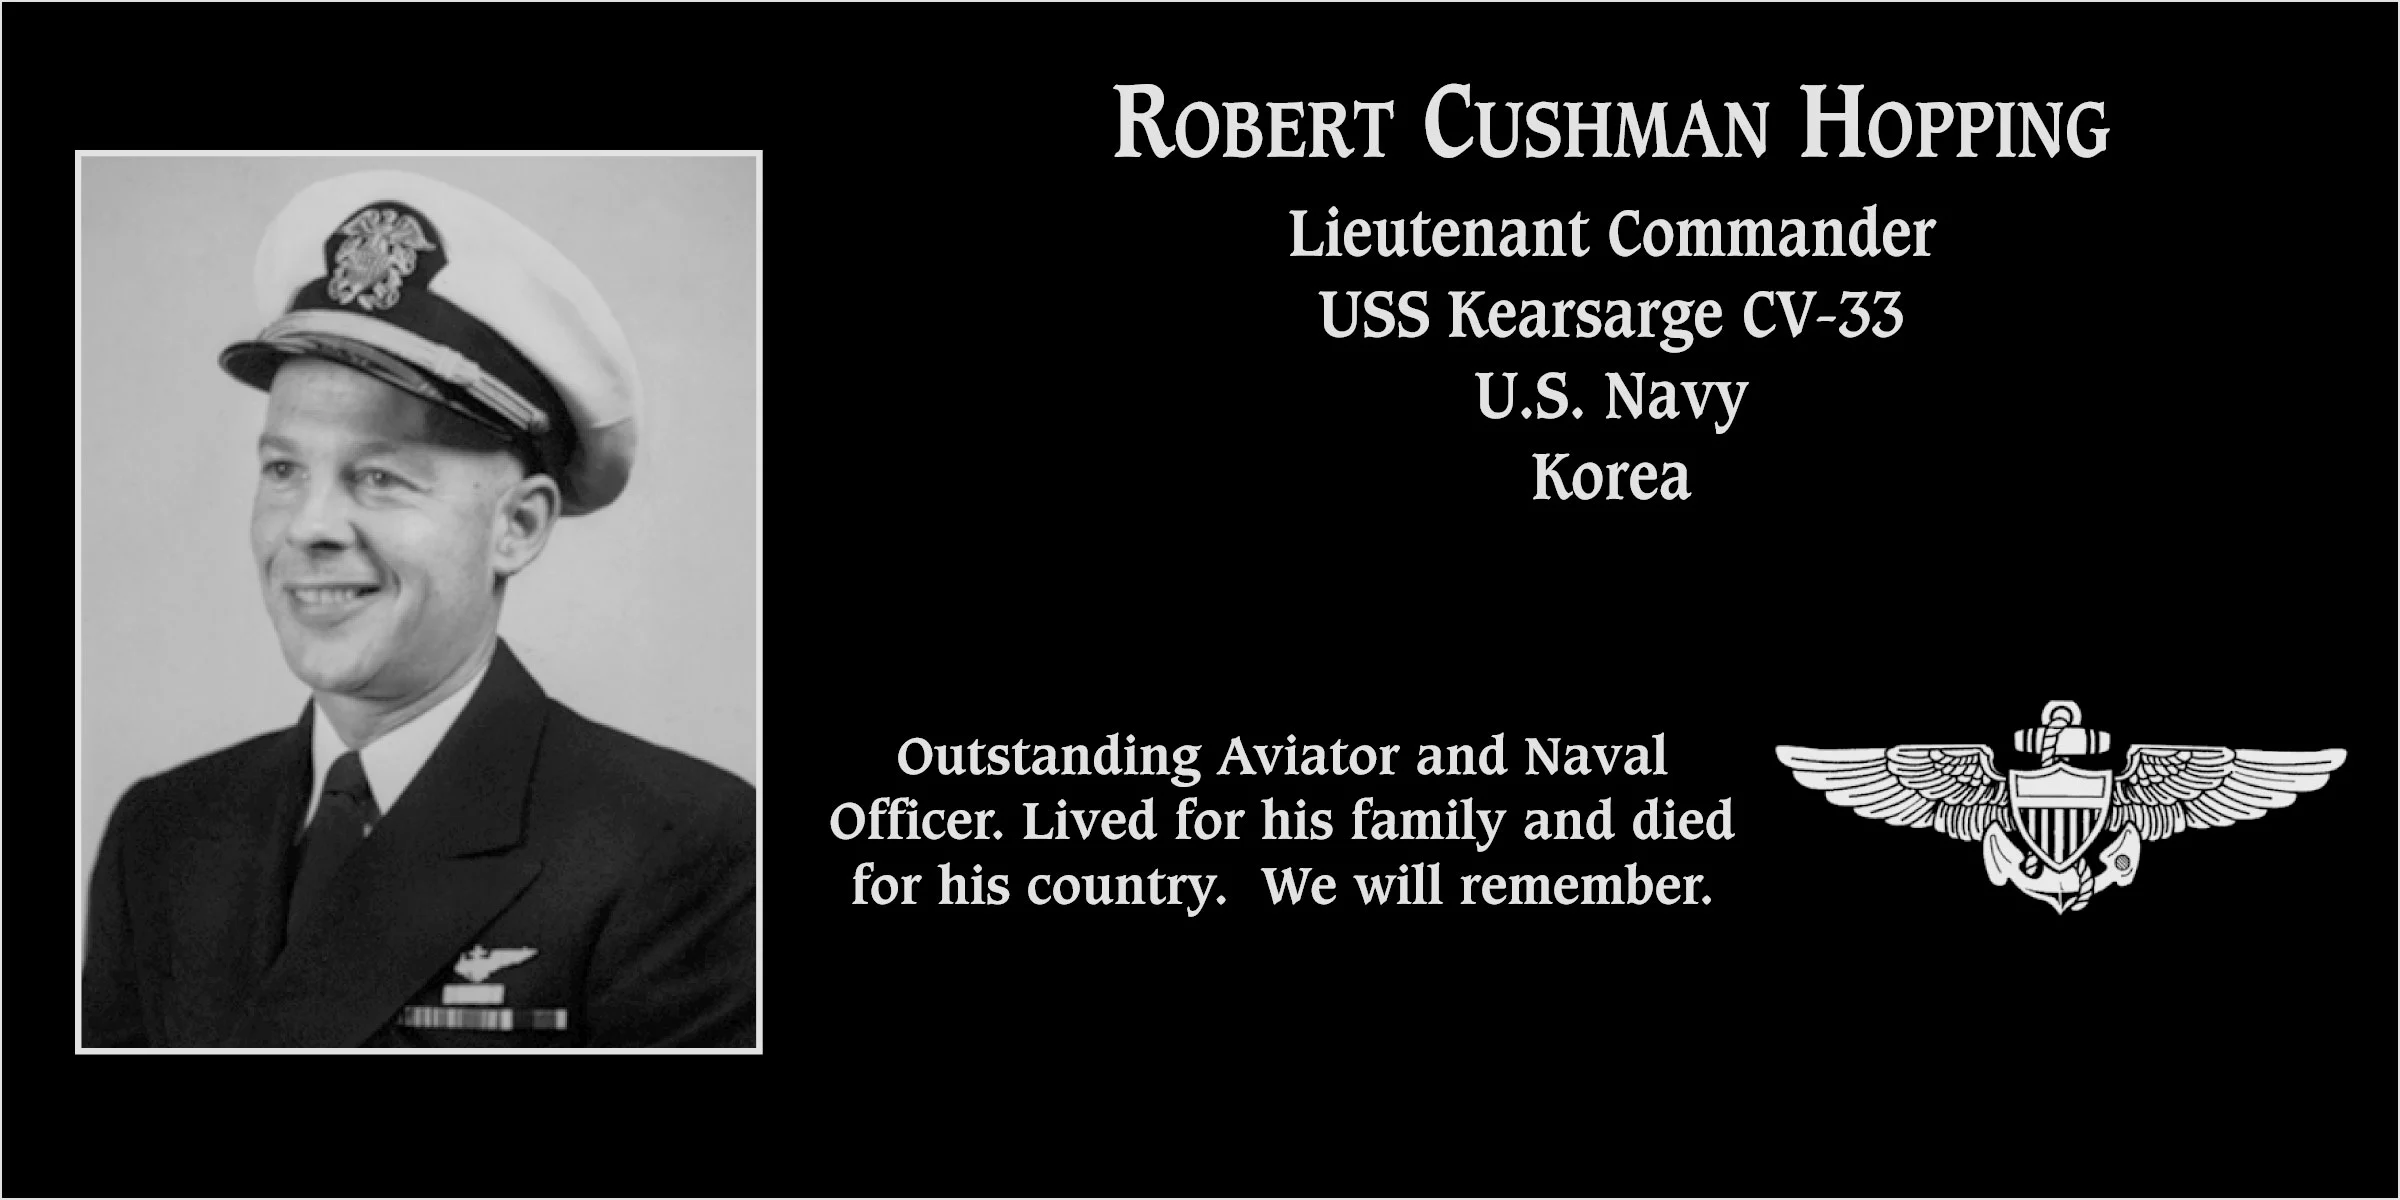 Robert Cushman Hopping